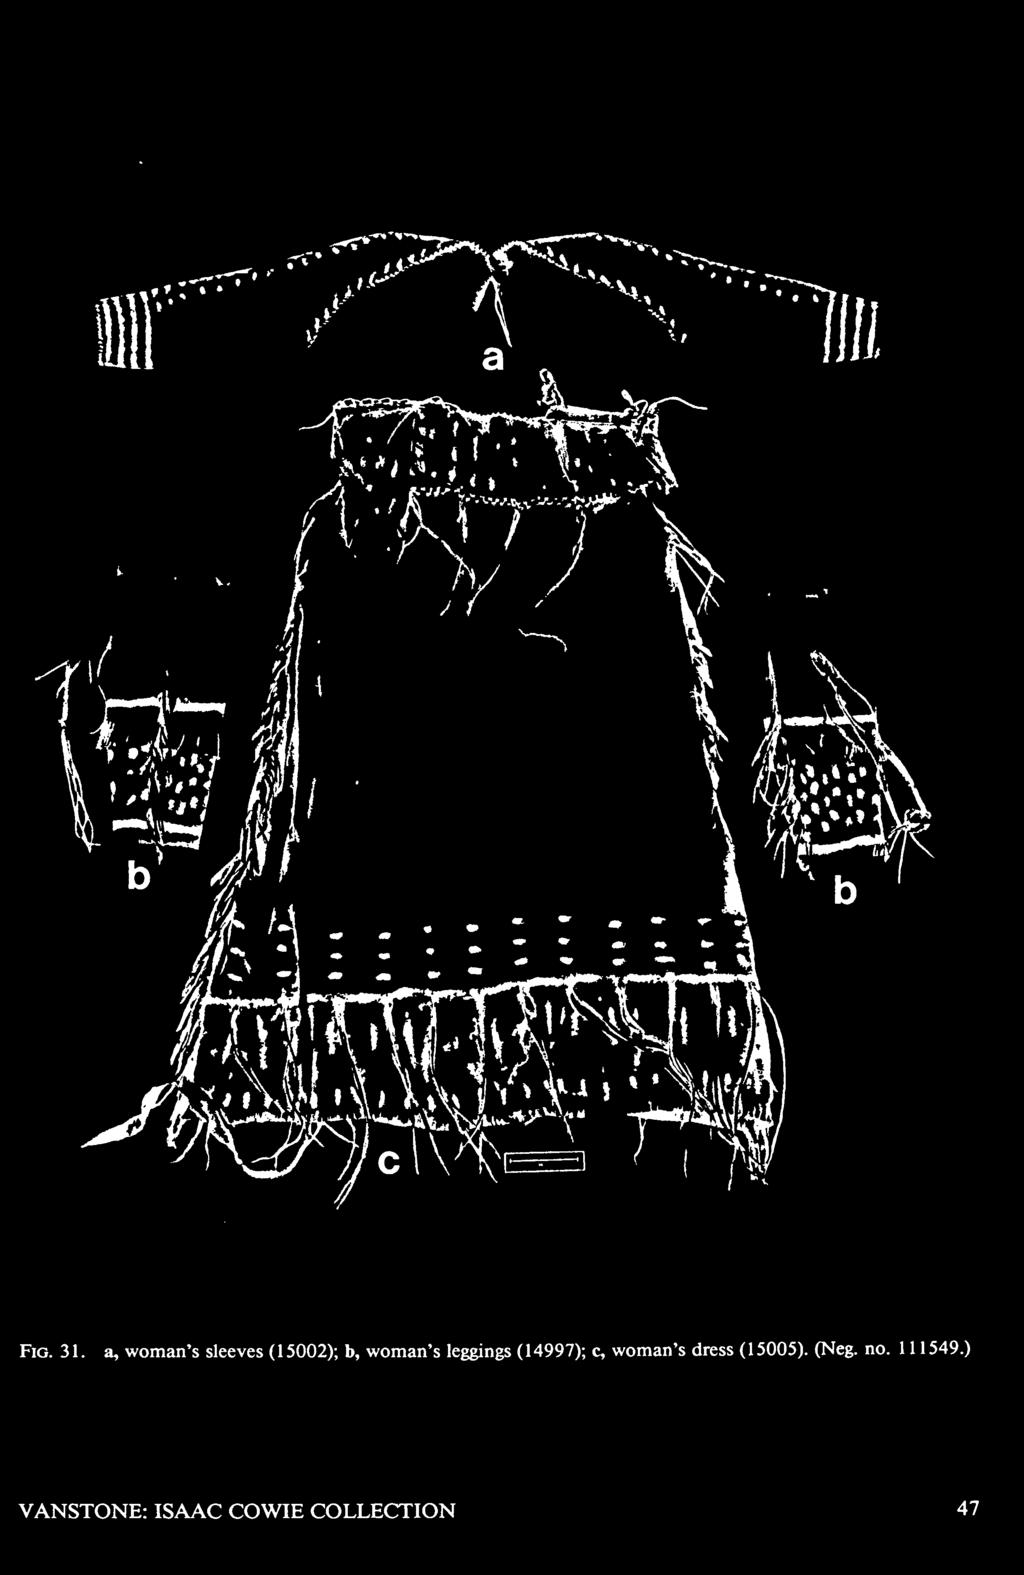 woman's dress (15005).